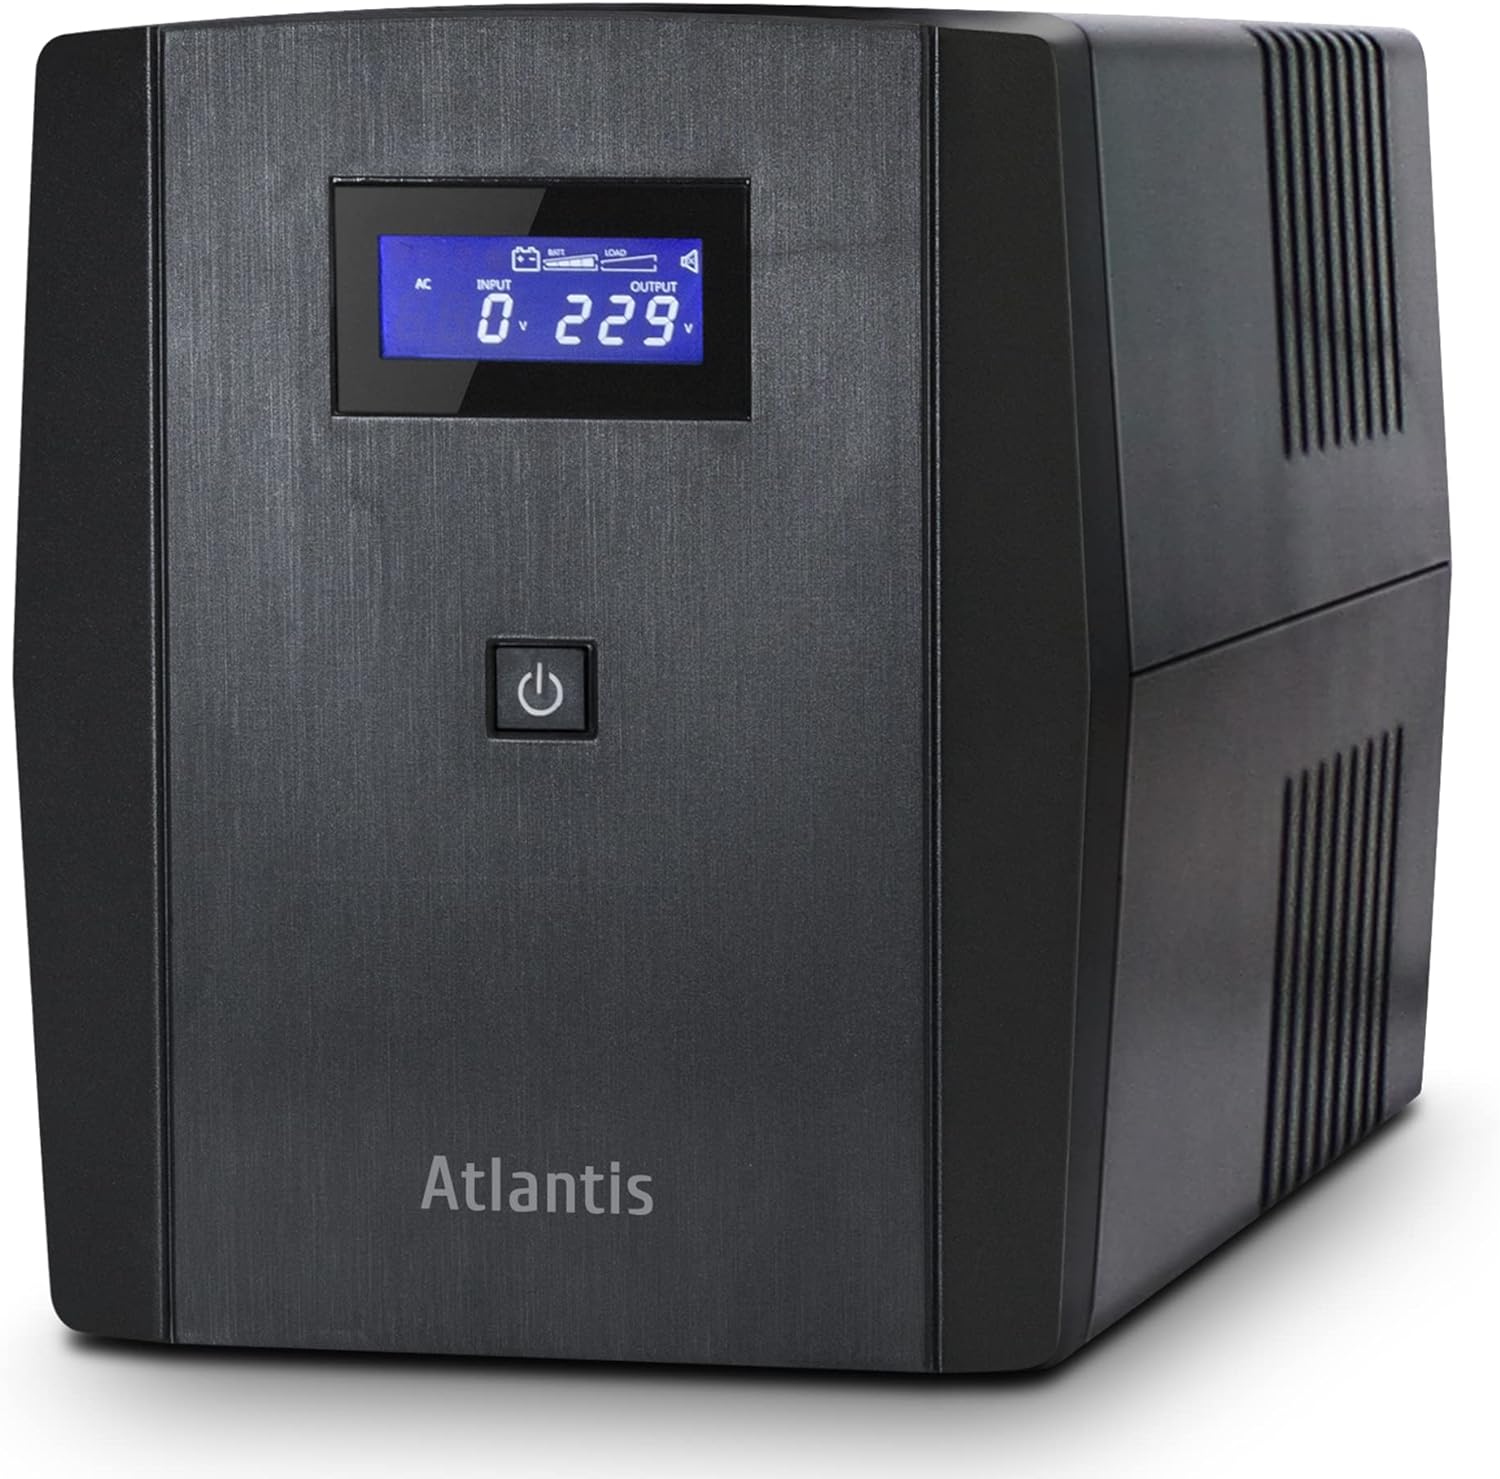 Atlantis A03-S2001 OnePower 2001